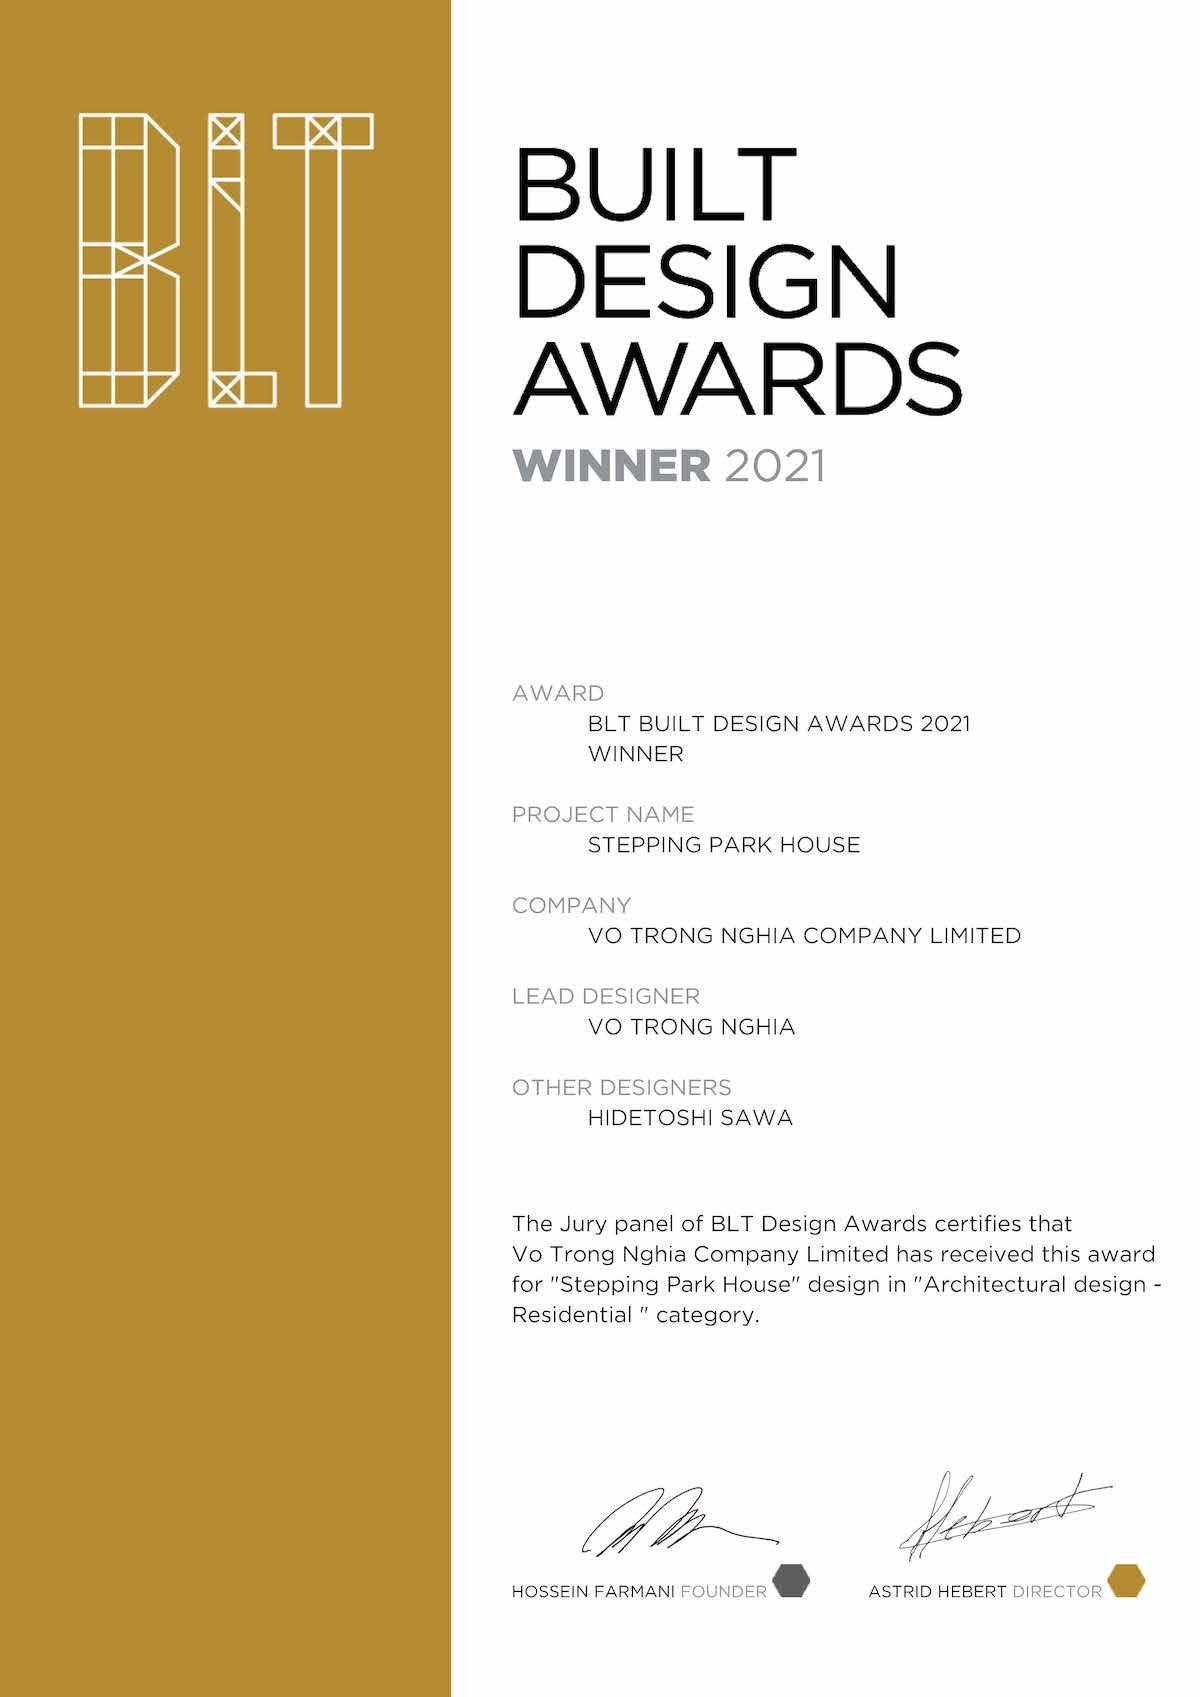 kienviet kienviet vo trong nghia architects vtn architects gianh chien thang tai blt built design awards 2021 100